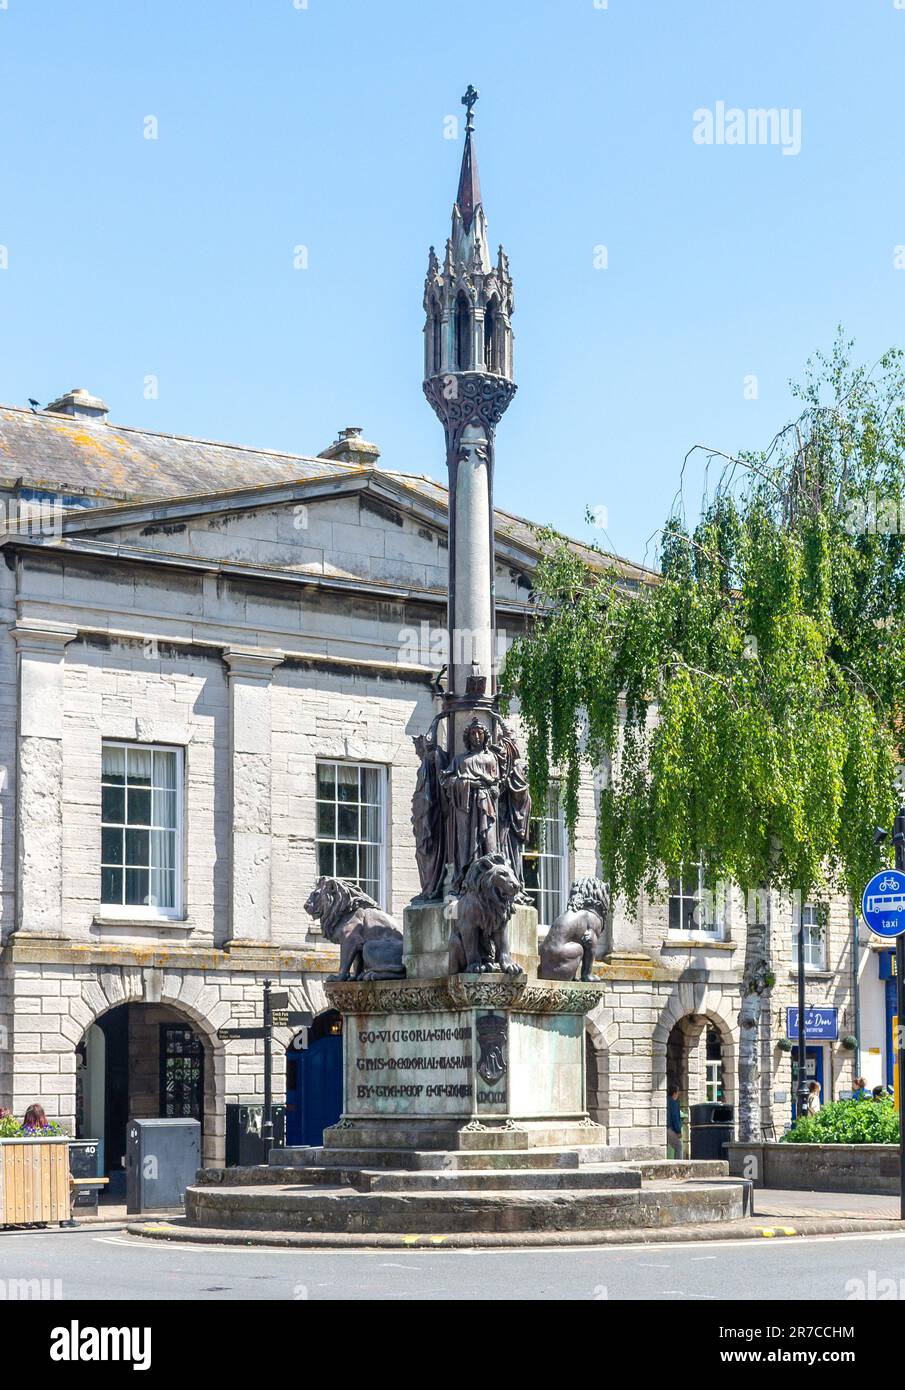 Queen Victoria Memorial, St James' Square, Newport, Isle of Wight, England, United Kingdom Stock Photo